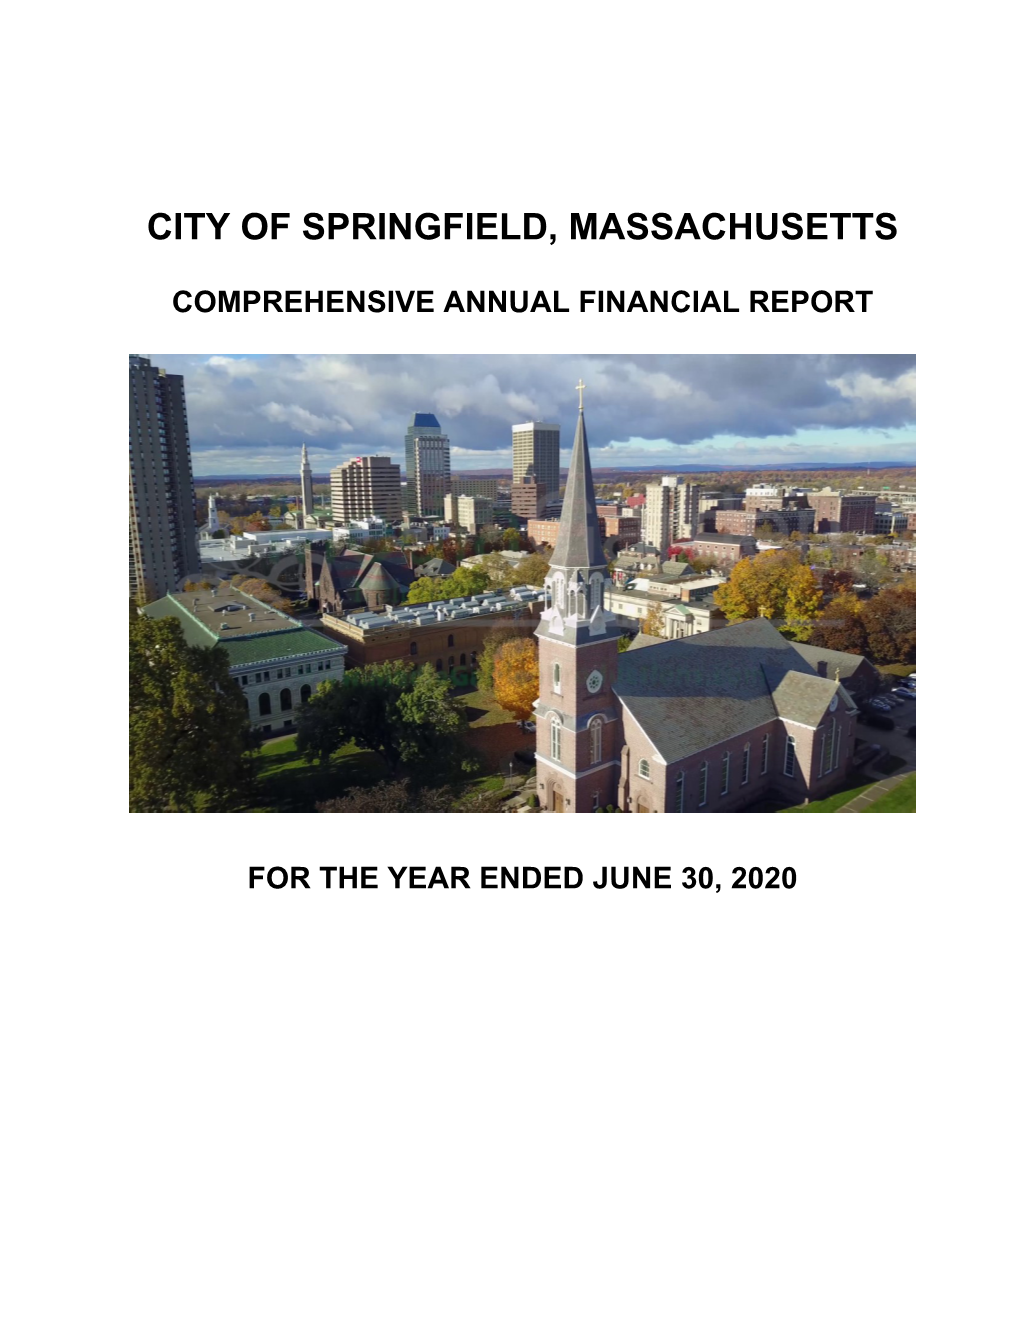 City of Springfield, Massachusetts